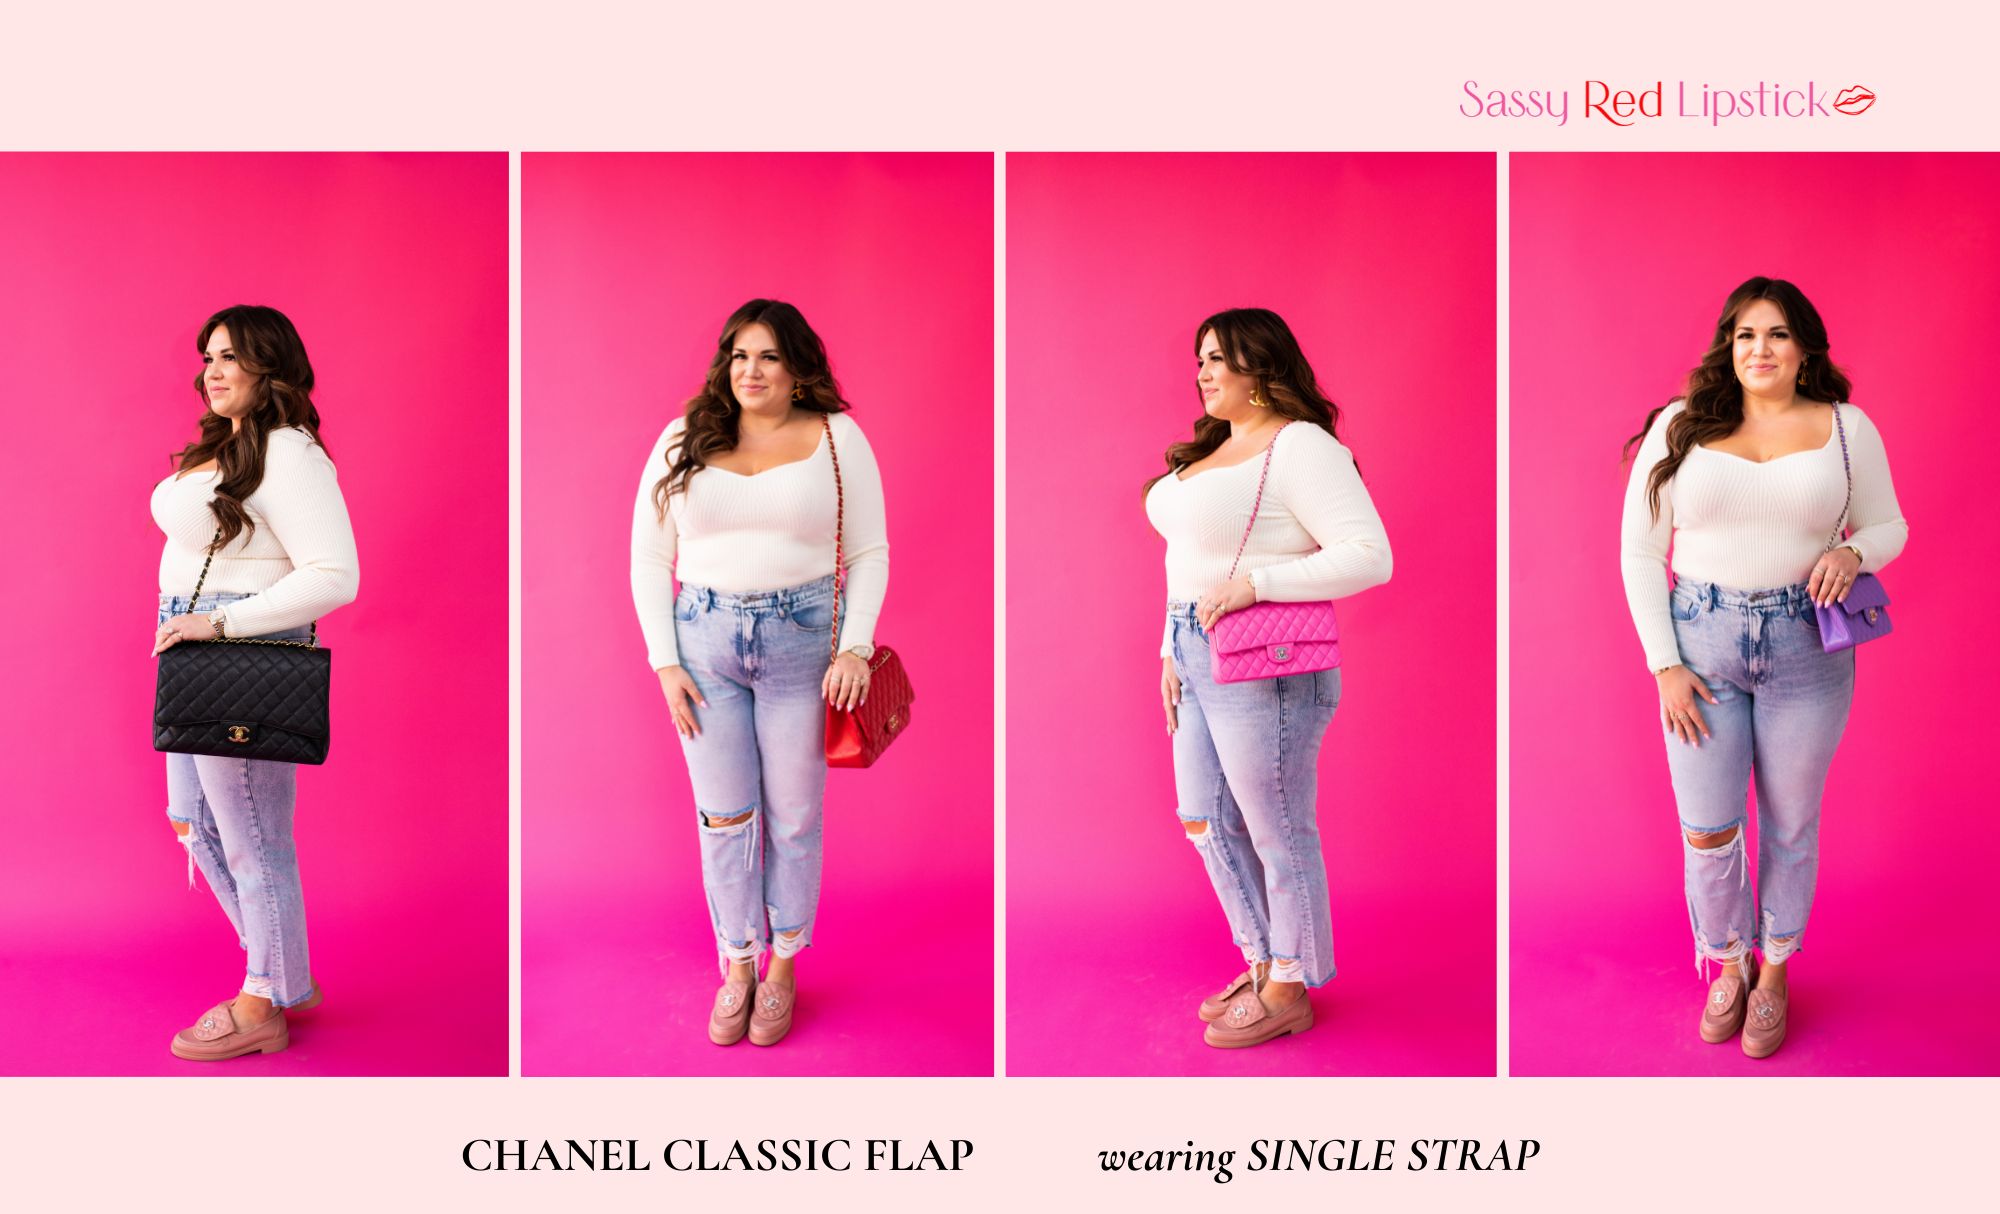 chanel classic flap small vs medium - Lemon8 Search